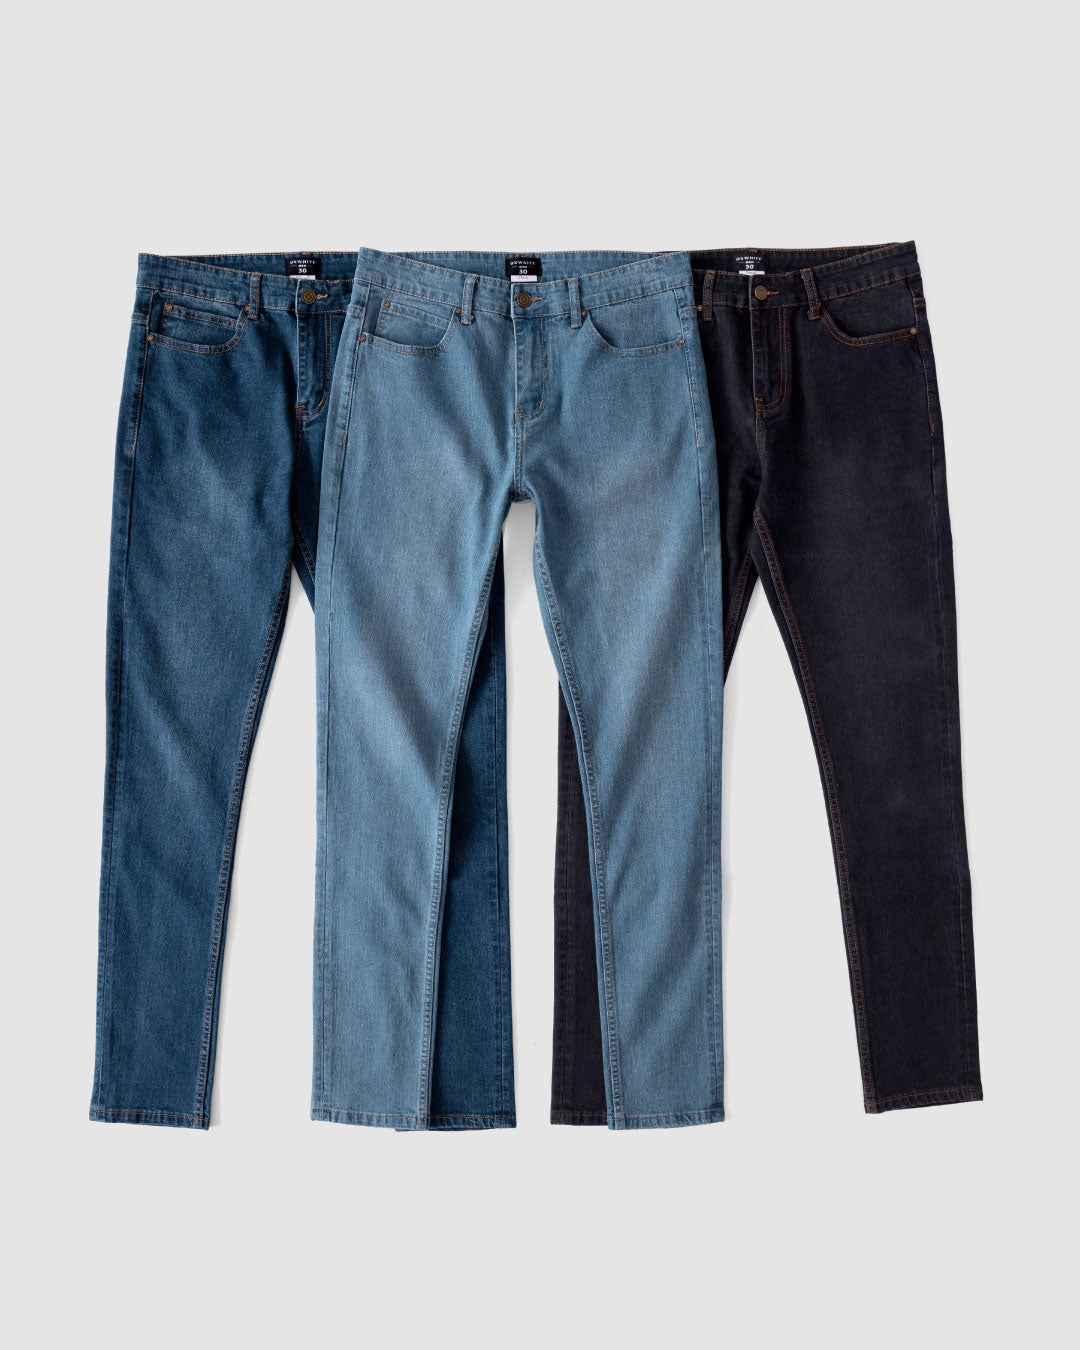 Buy Blue Jeans for Men by Pepe Jeans Online  Ajiocom